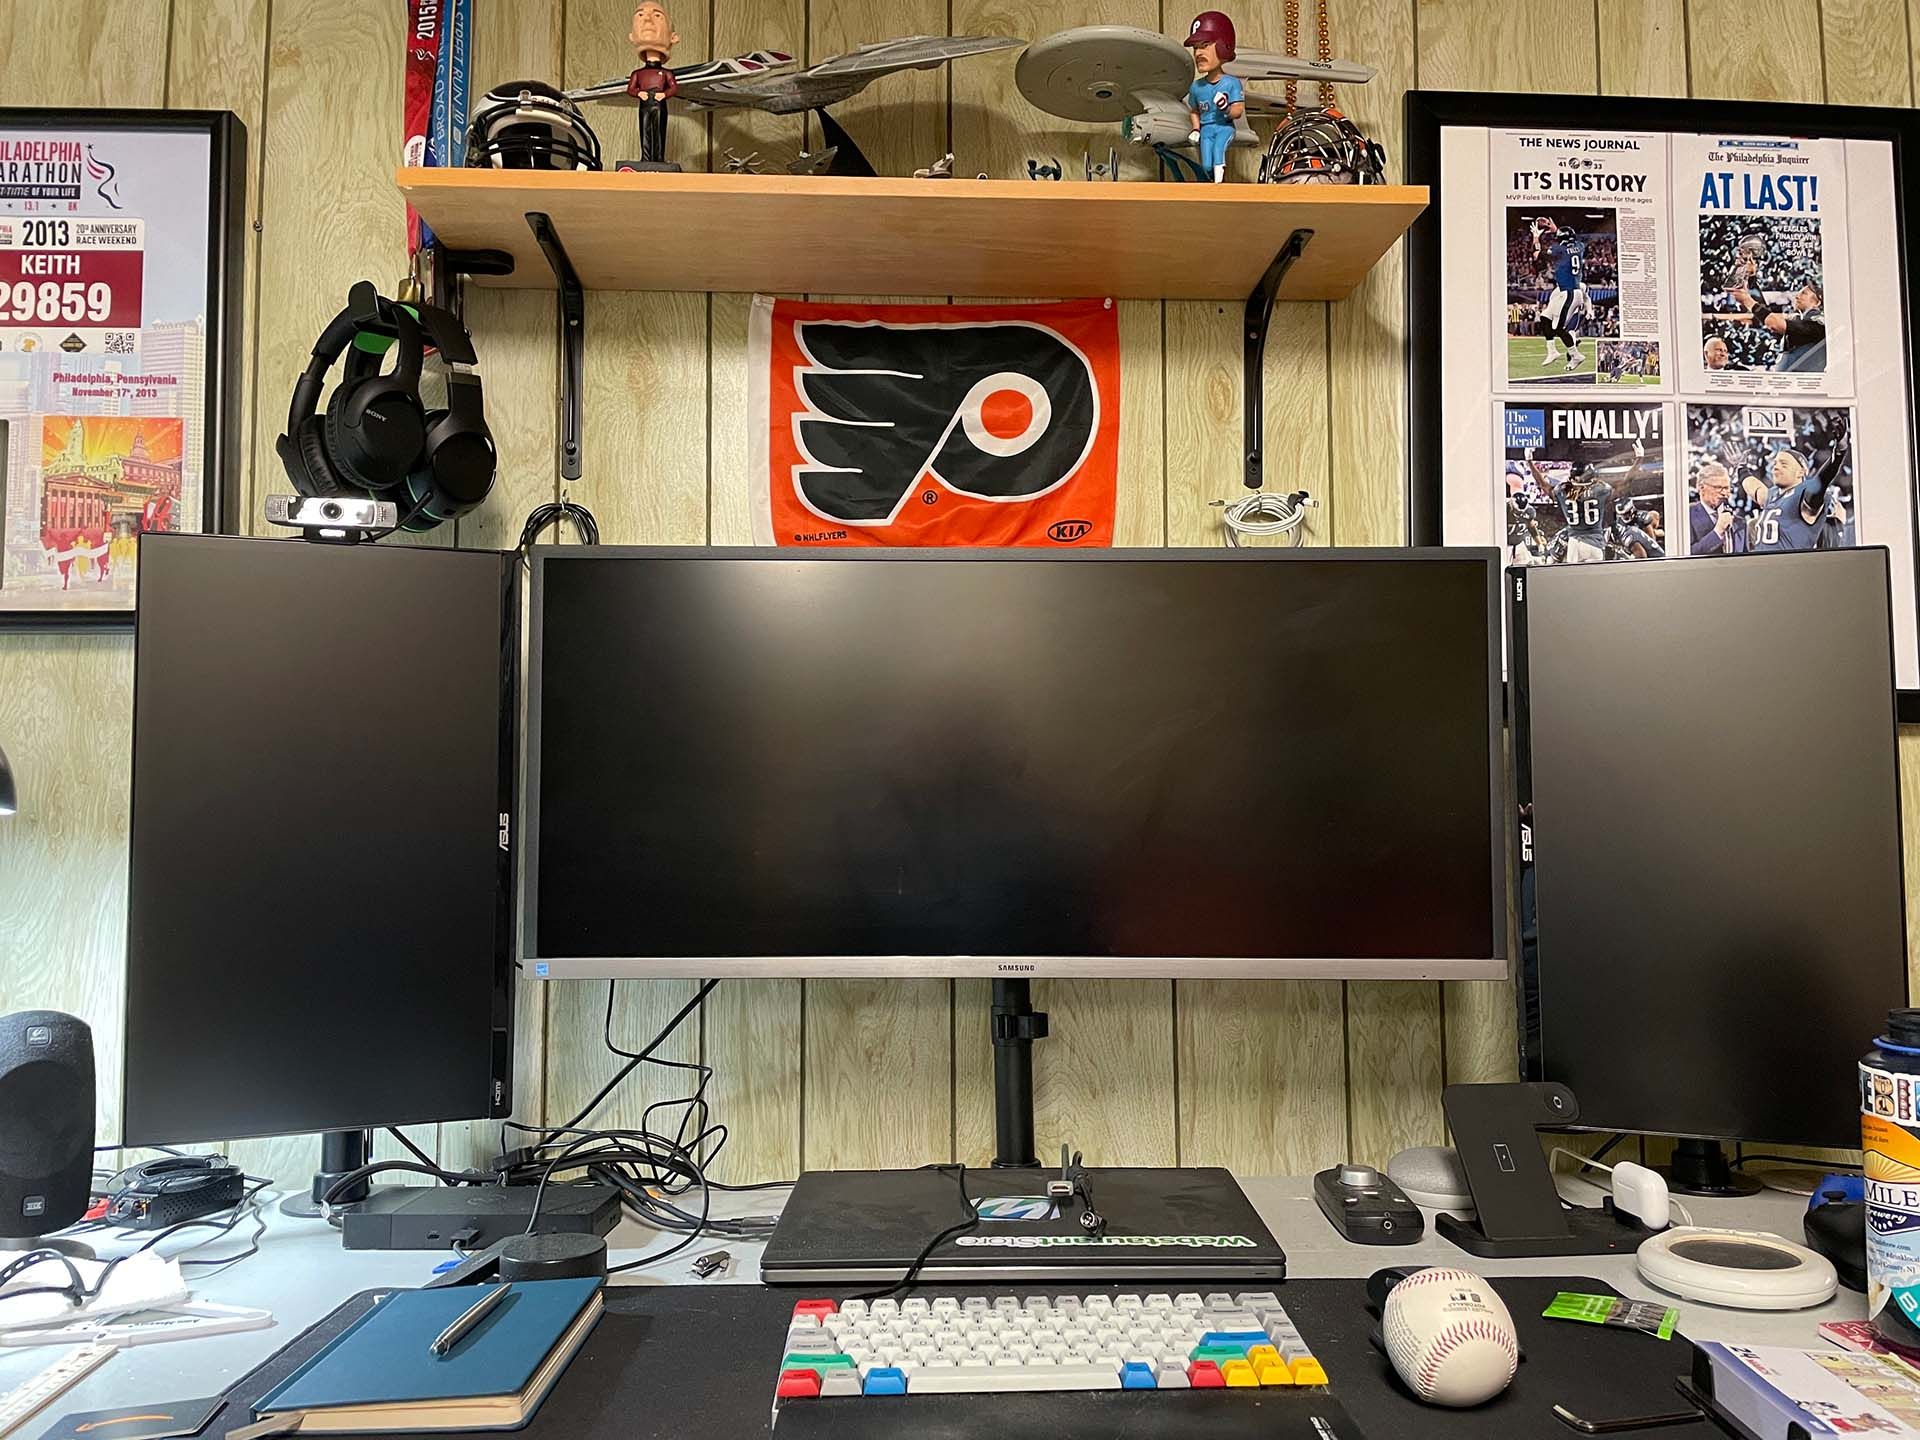 My work desk setup in my basement